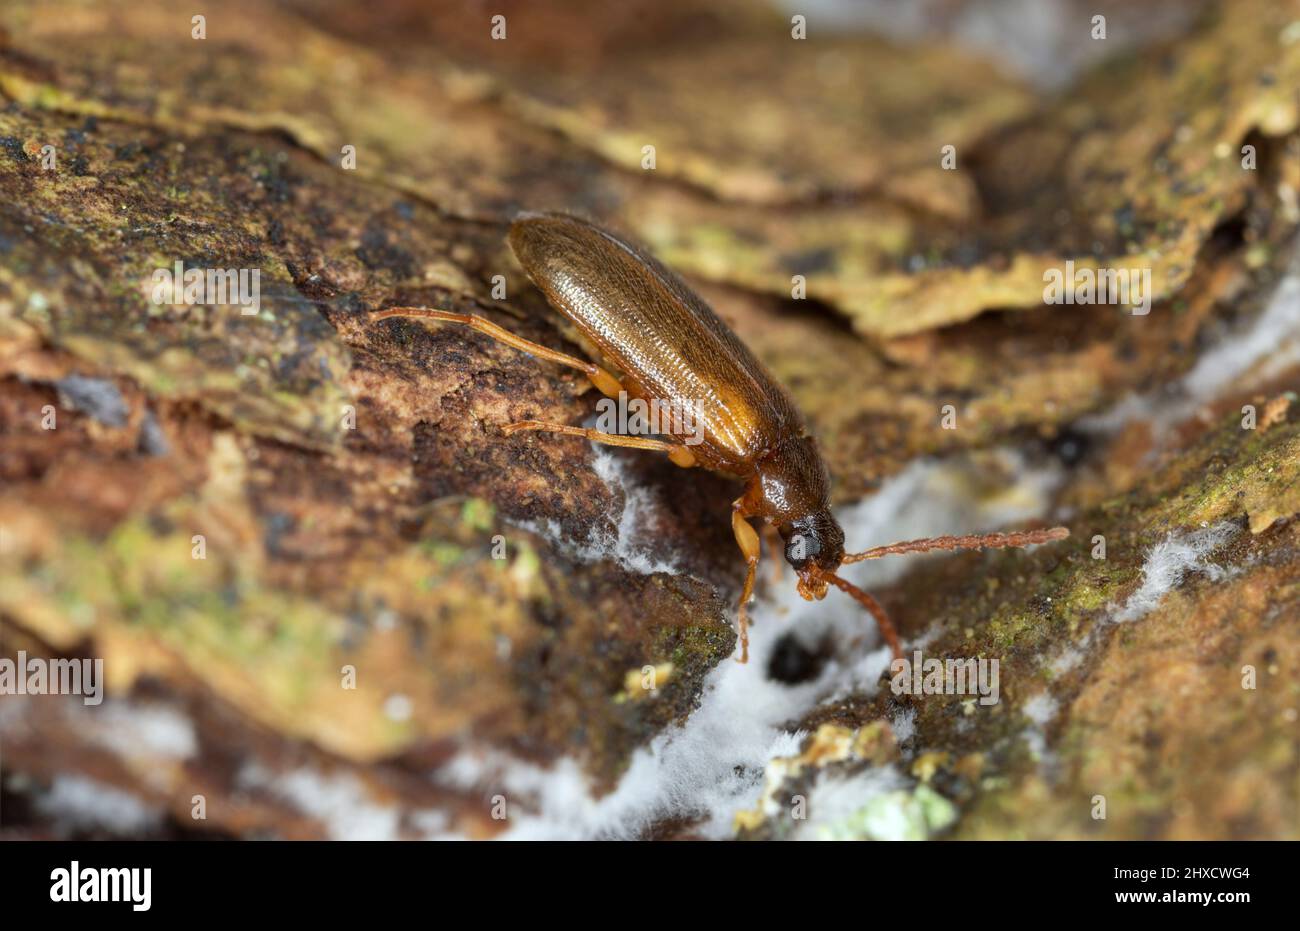 Darkling beetle, mycetophagus flavipes on aspen bark with fungi, macro photo Stock Photo